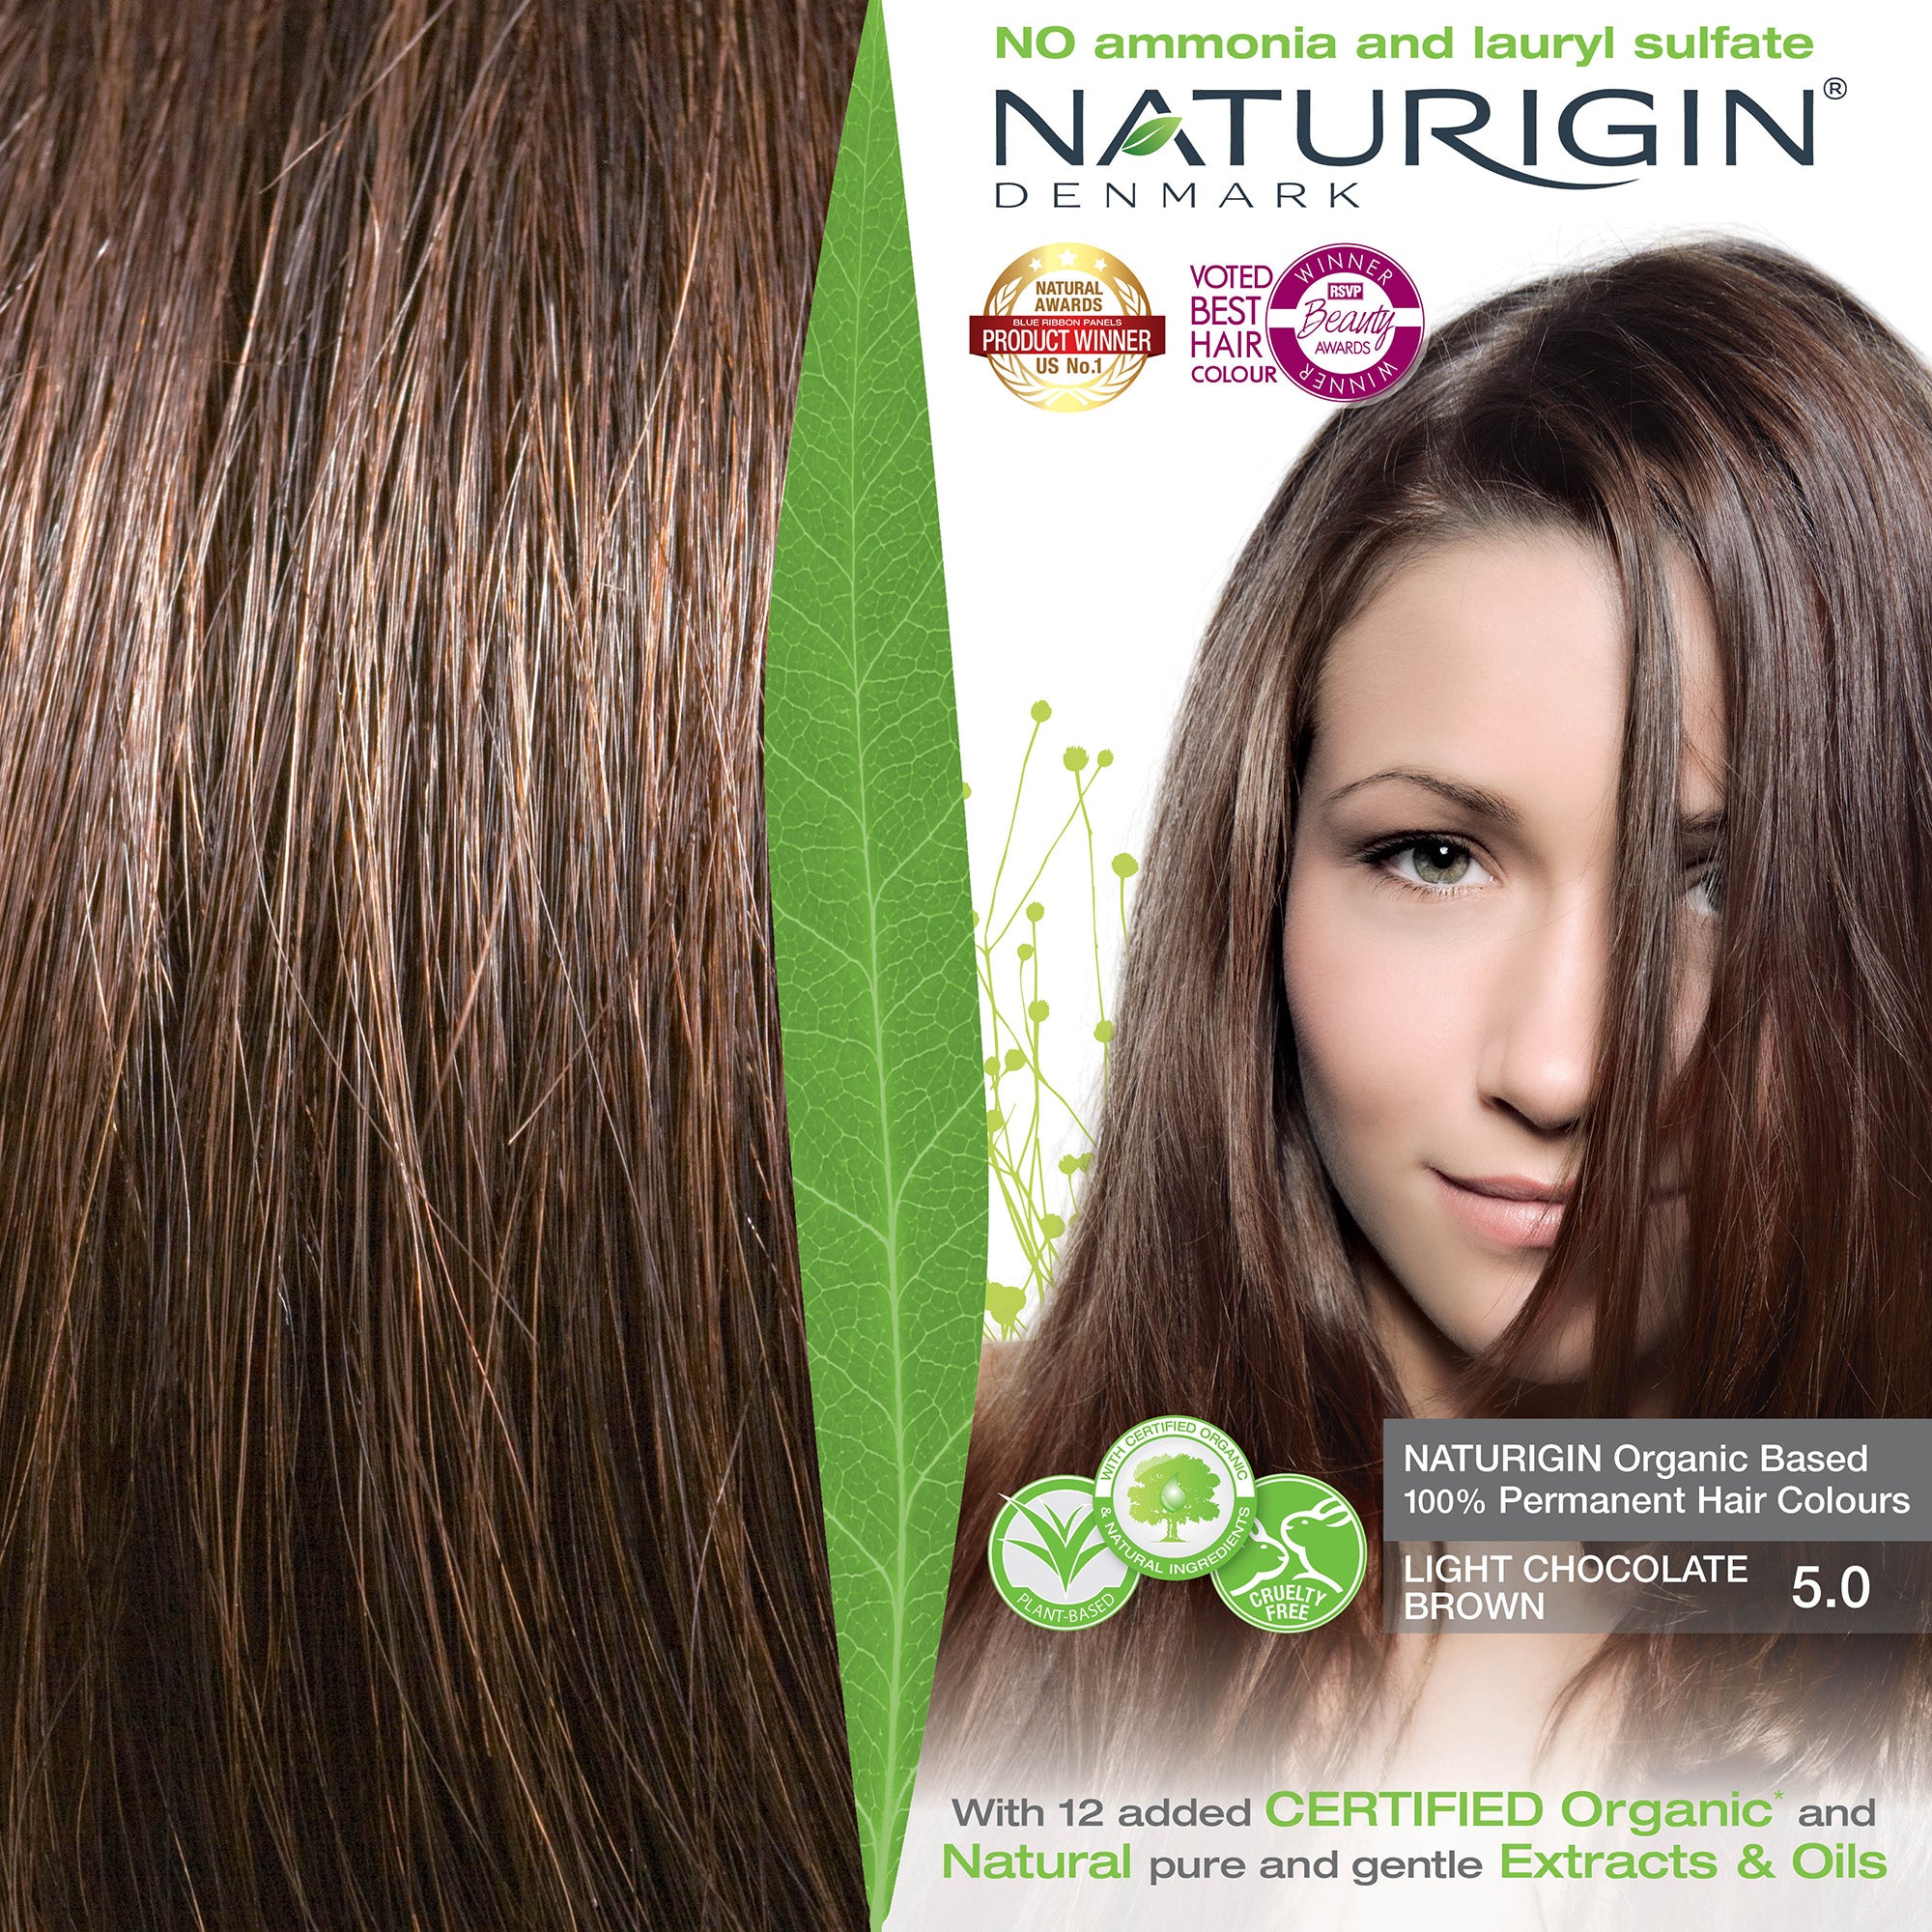 Light Chocolate Brown 5.0 Permanent Hair Colour